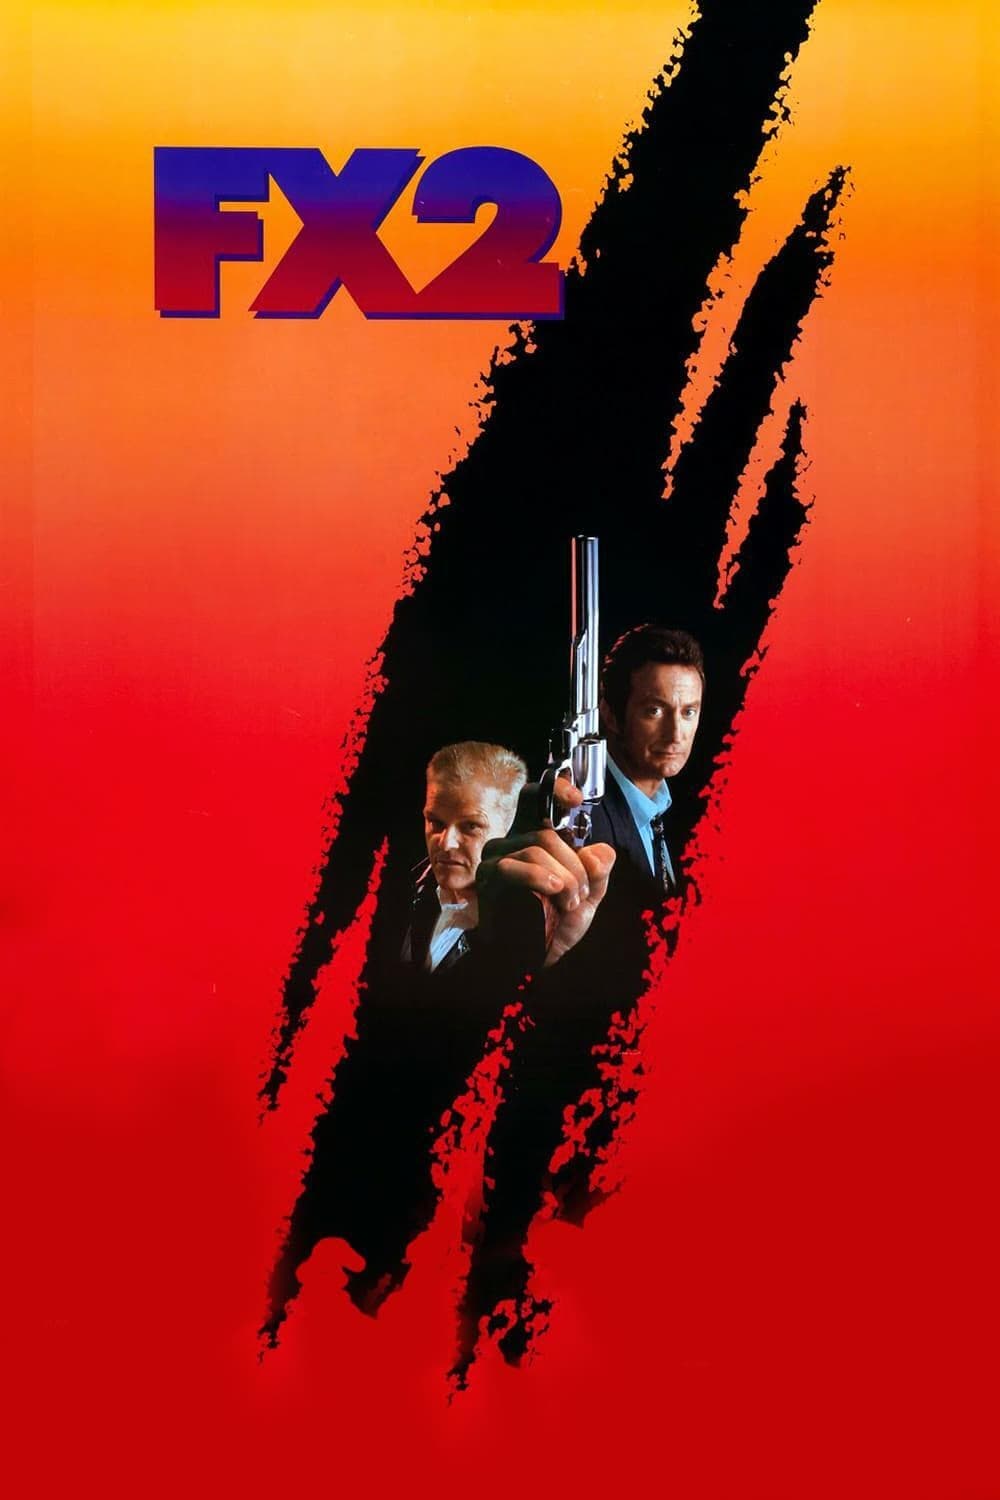 FX 2 Ilusiones mortales (1991)